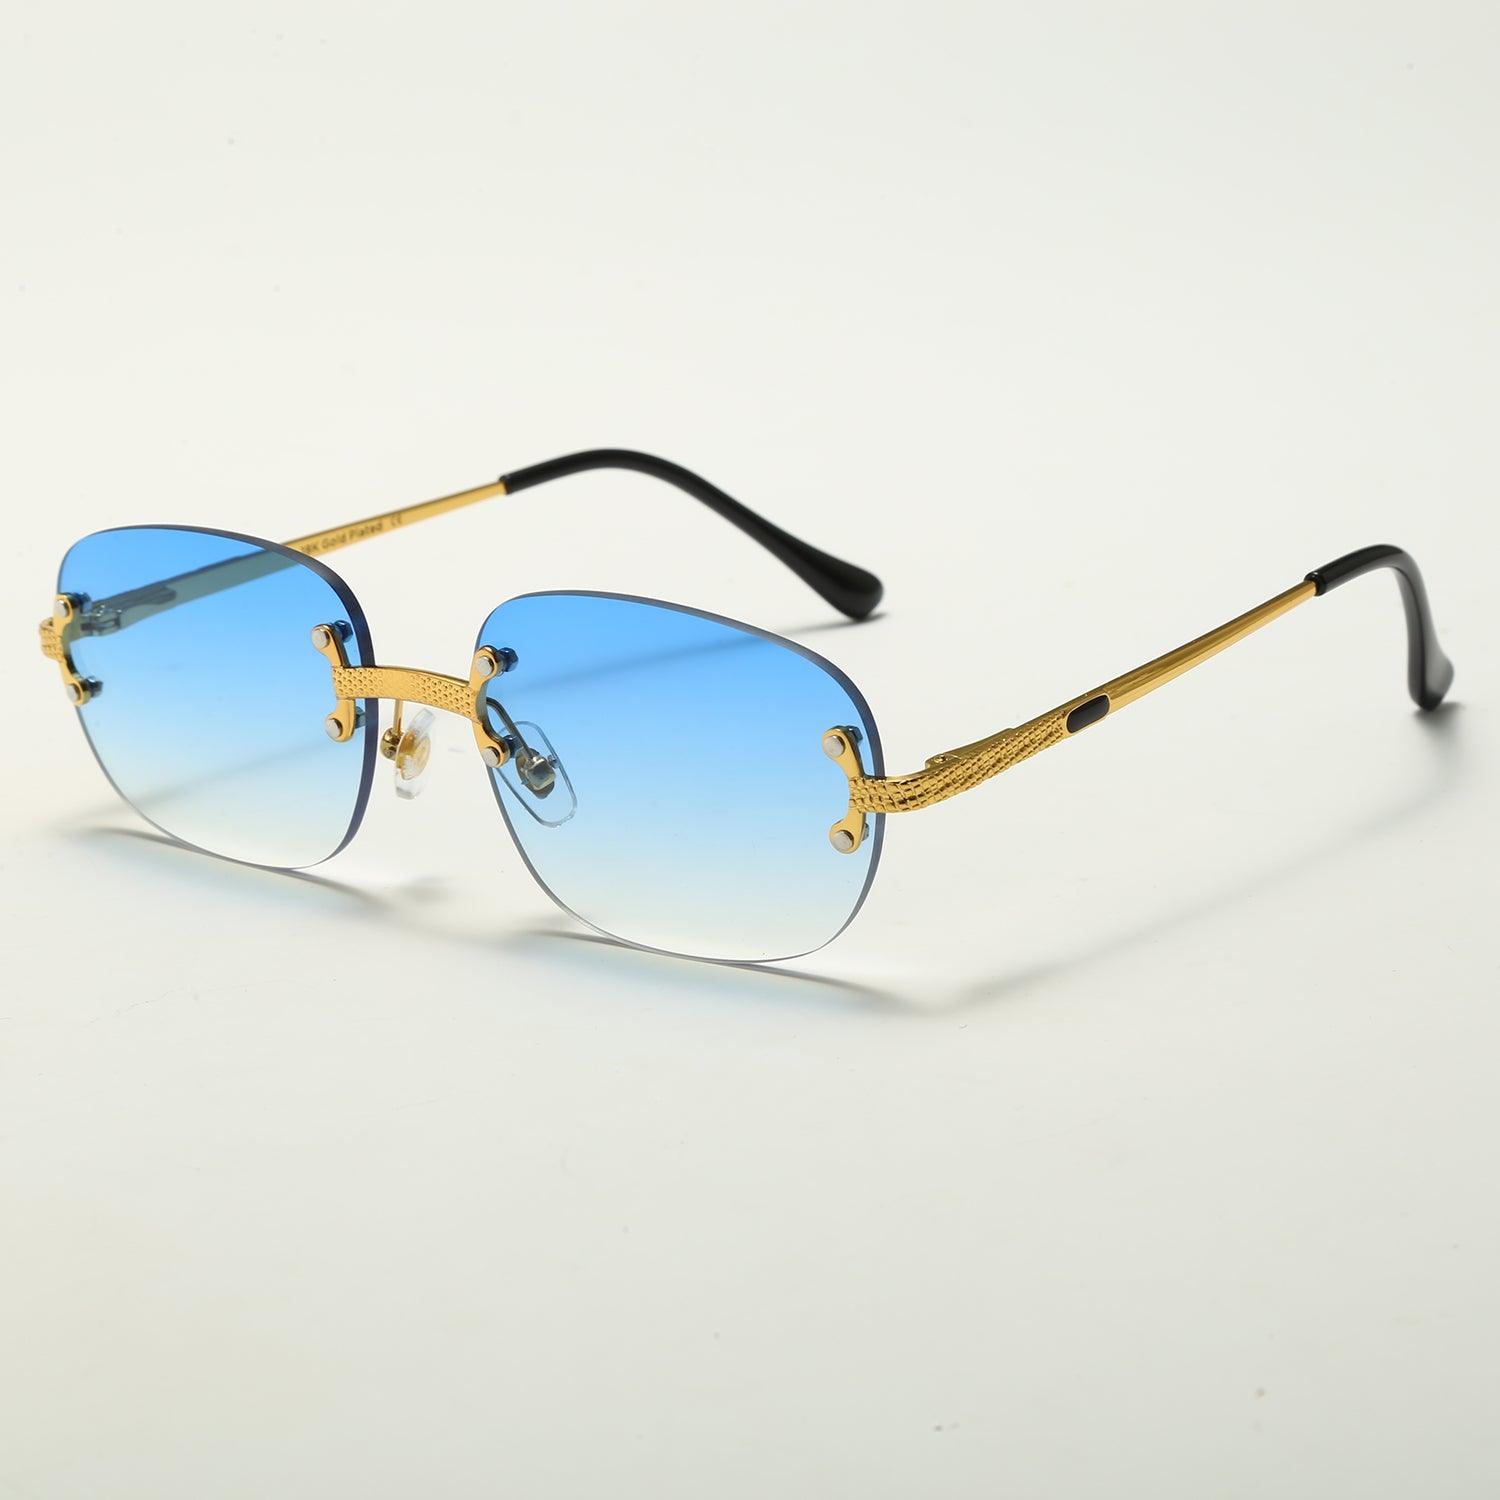 (6 PACK) High-quality 18K Covered Gold Oval Rimless Sunglasses For Men Luxury Frame - Bulk Sunglasses Wholesale